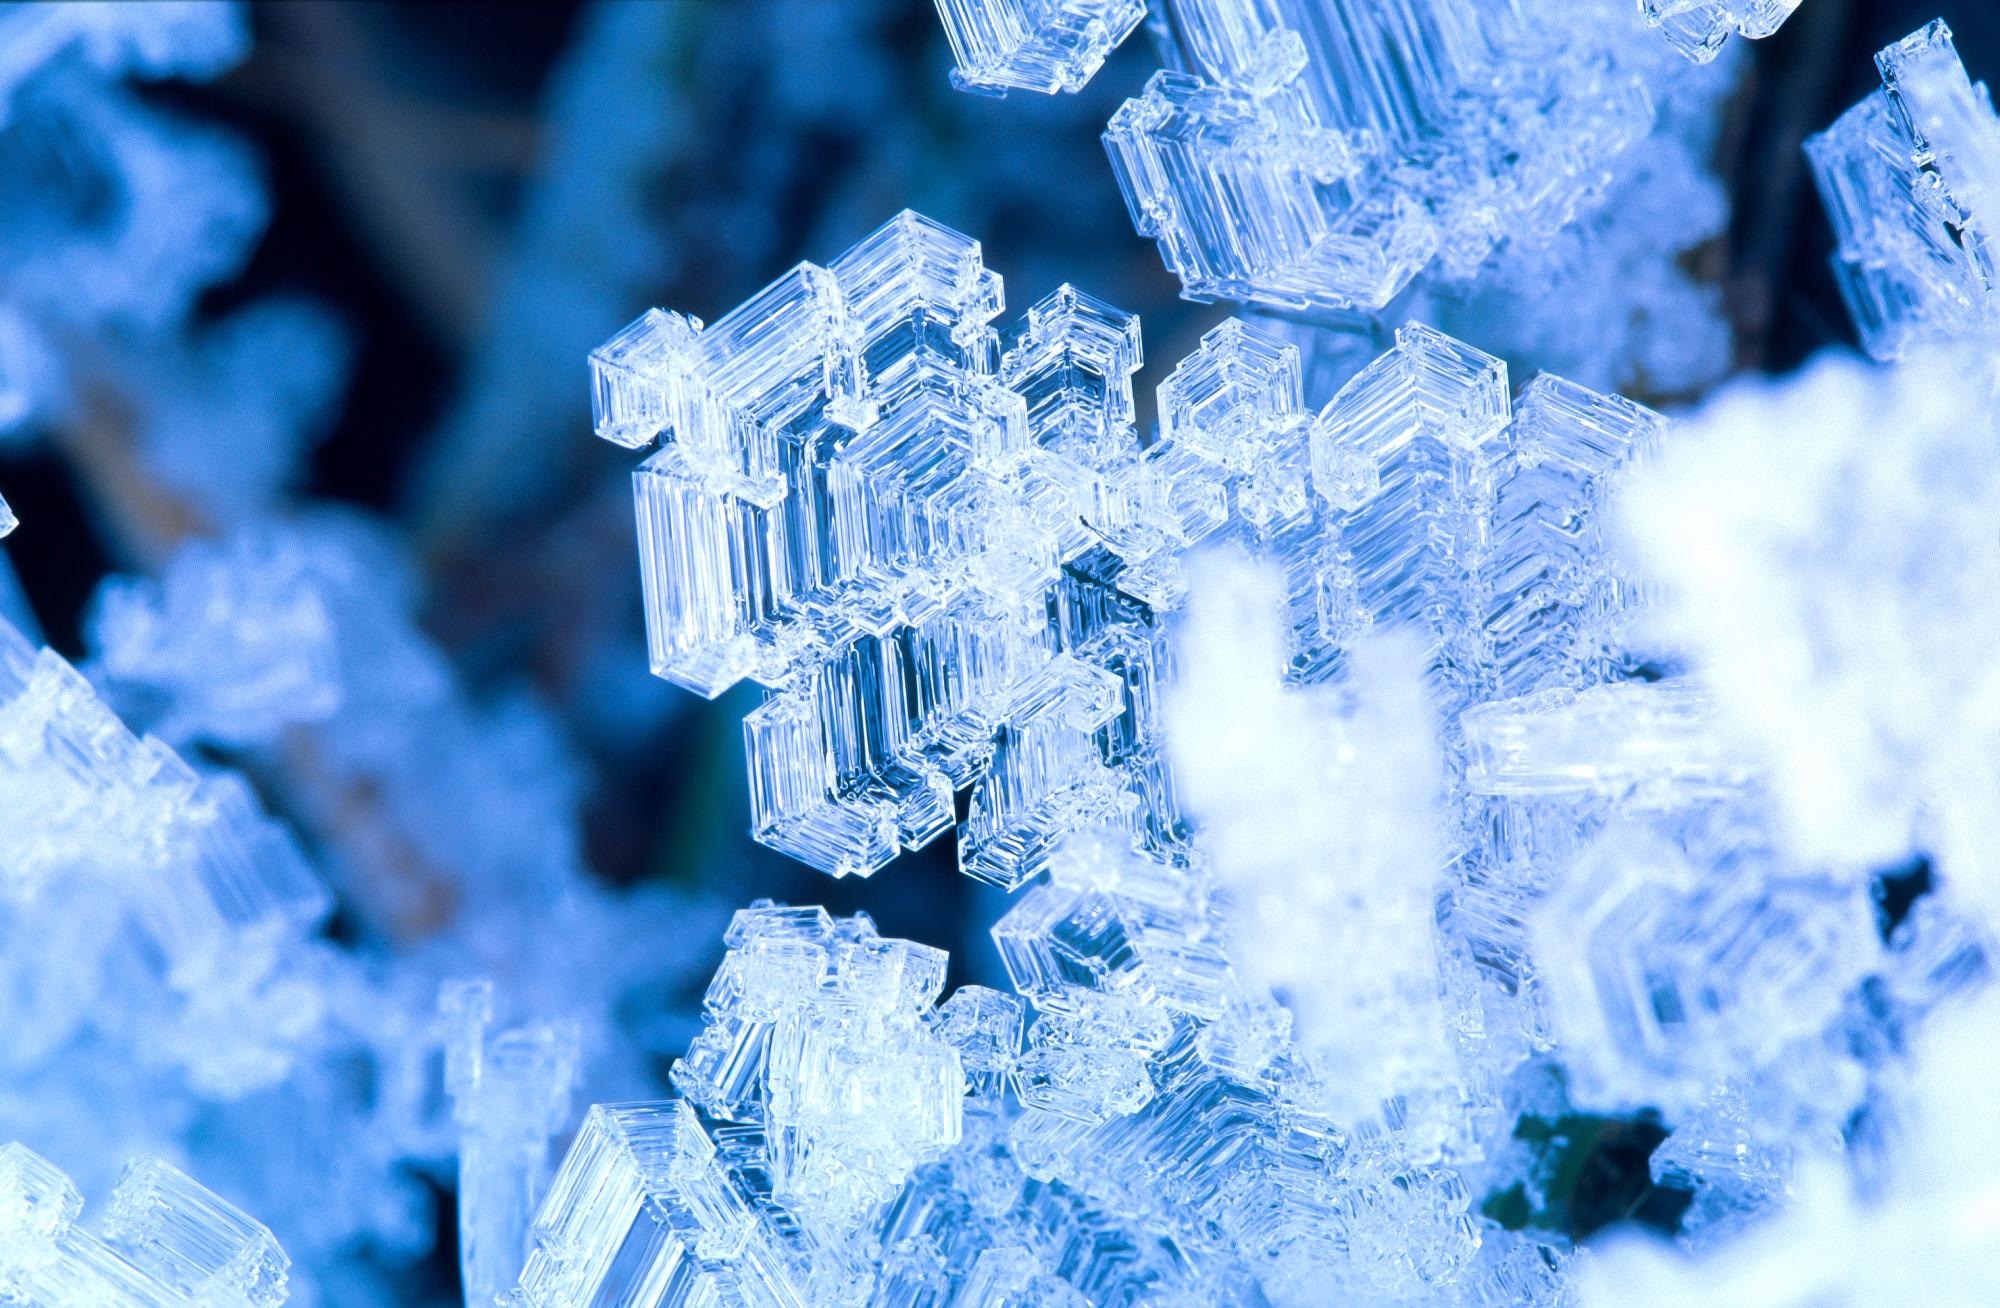 Study Explains New Form of Crystalline Ice